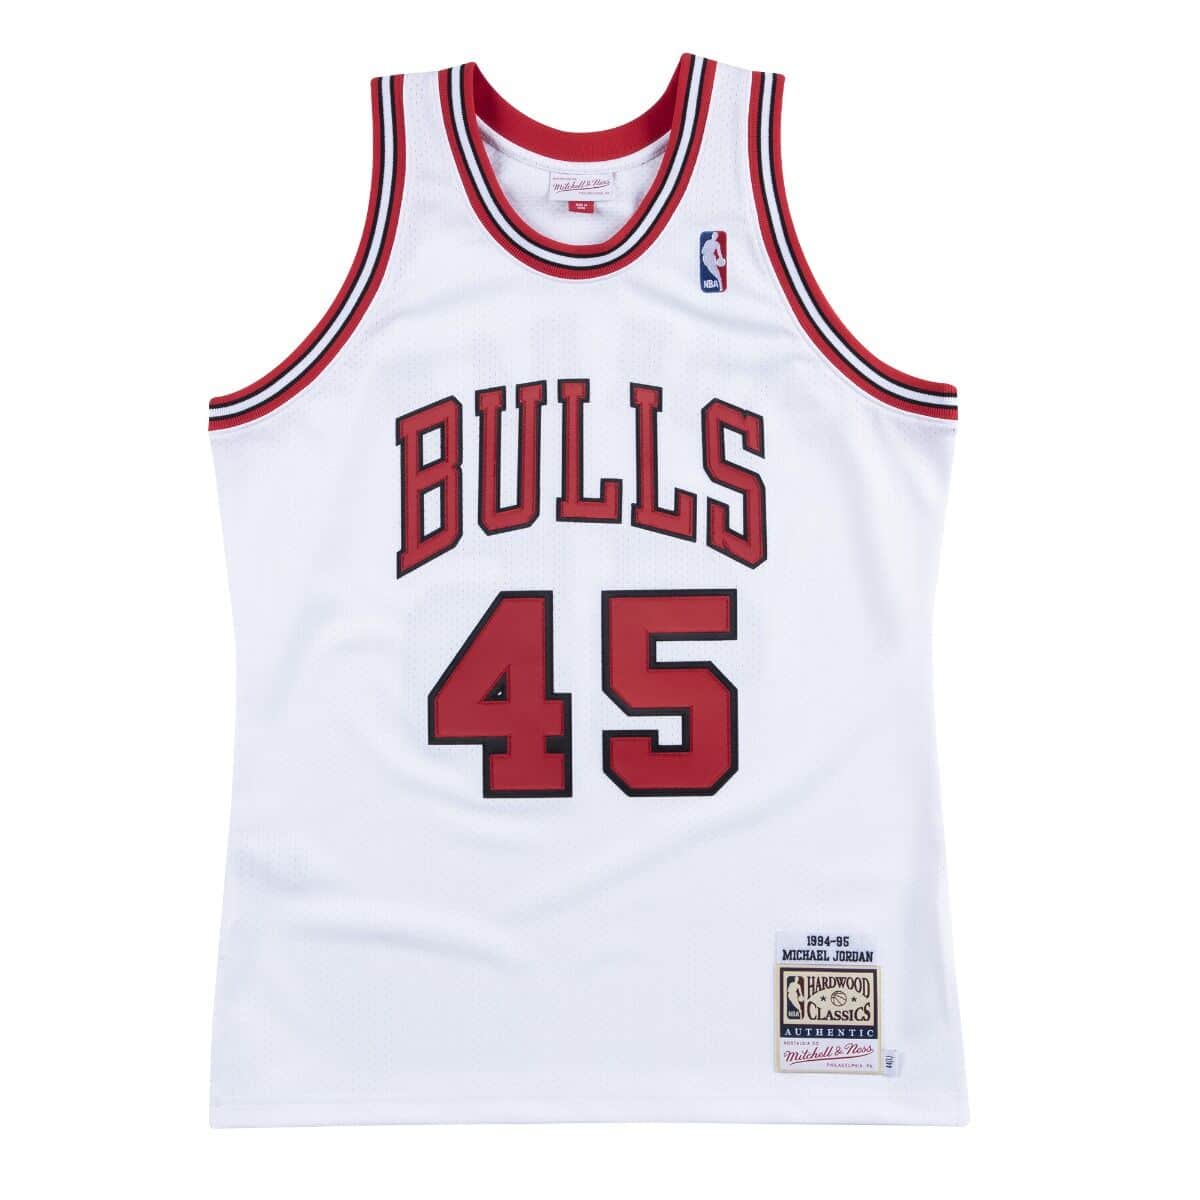 Chicago Bulls Store, Bulls Jerseys, Apparel, Merchandise